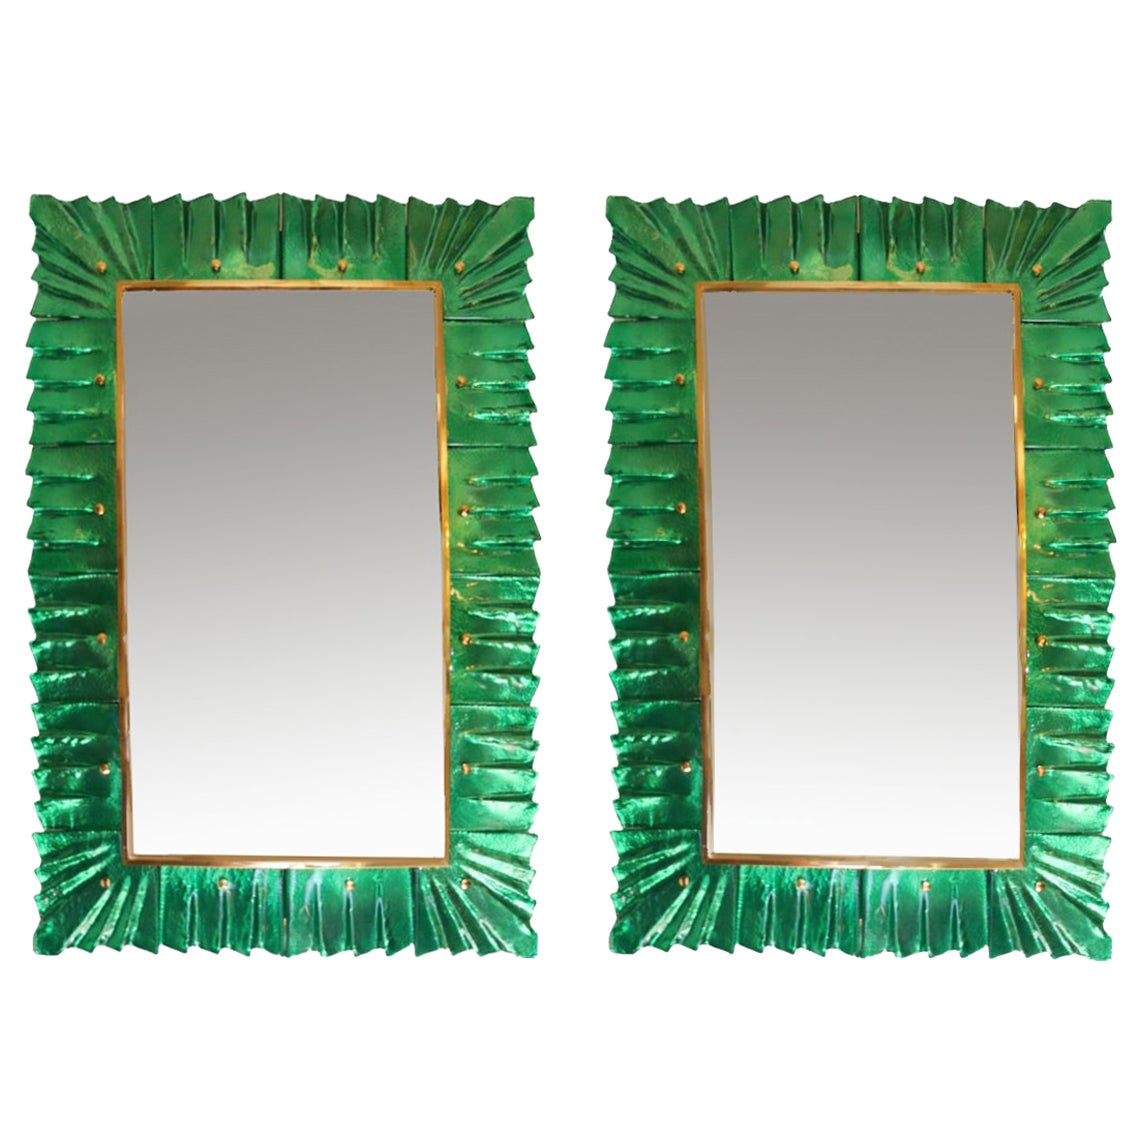 Paire de miroirs rectangulaires encadrés en verre de Murano vert émeraude, en stock en vente